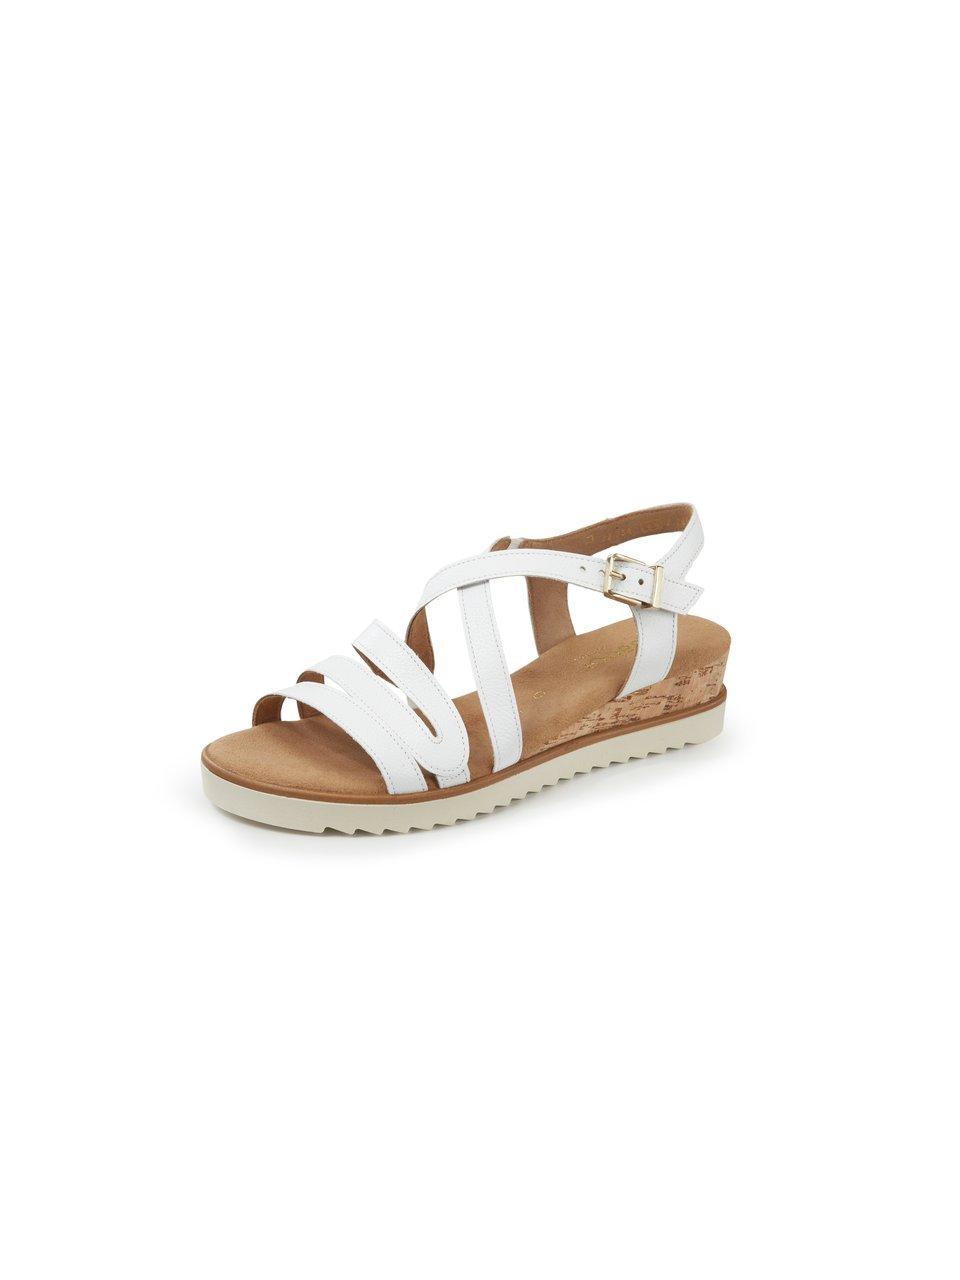 Gabor Comfort - Les sandales en cuir nappa de veau